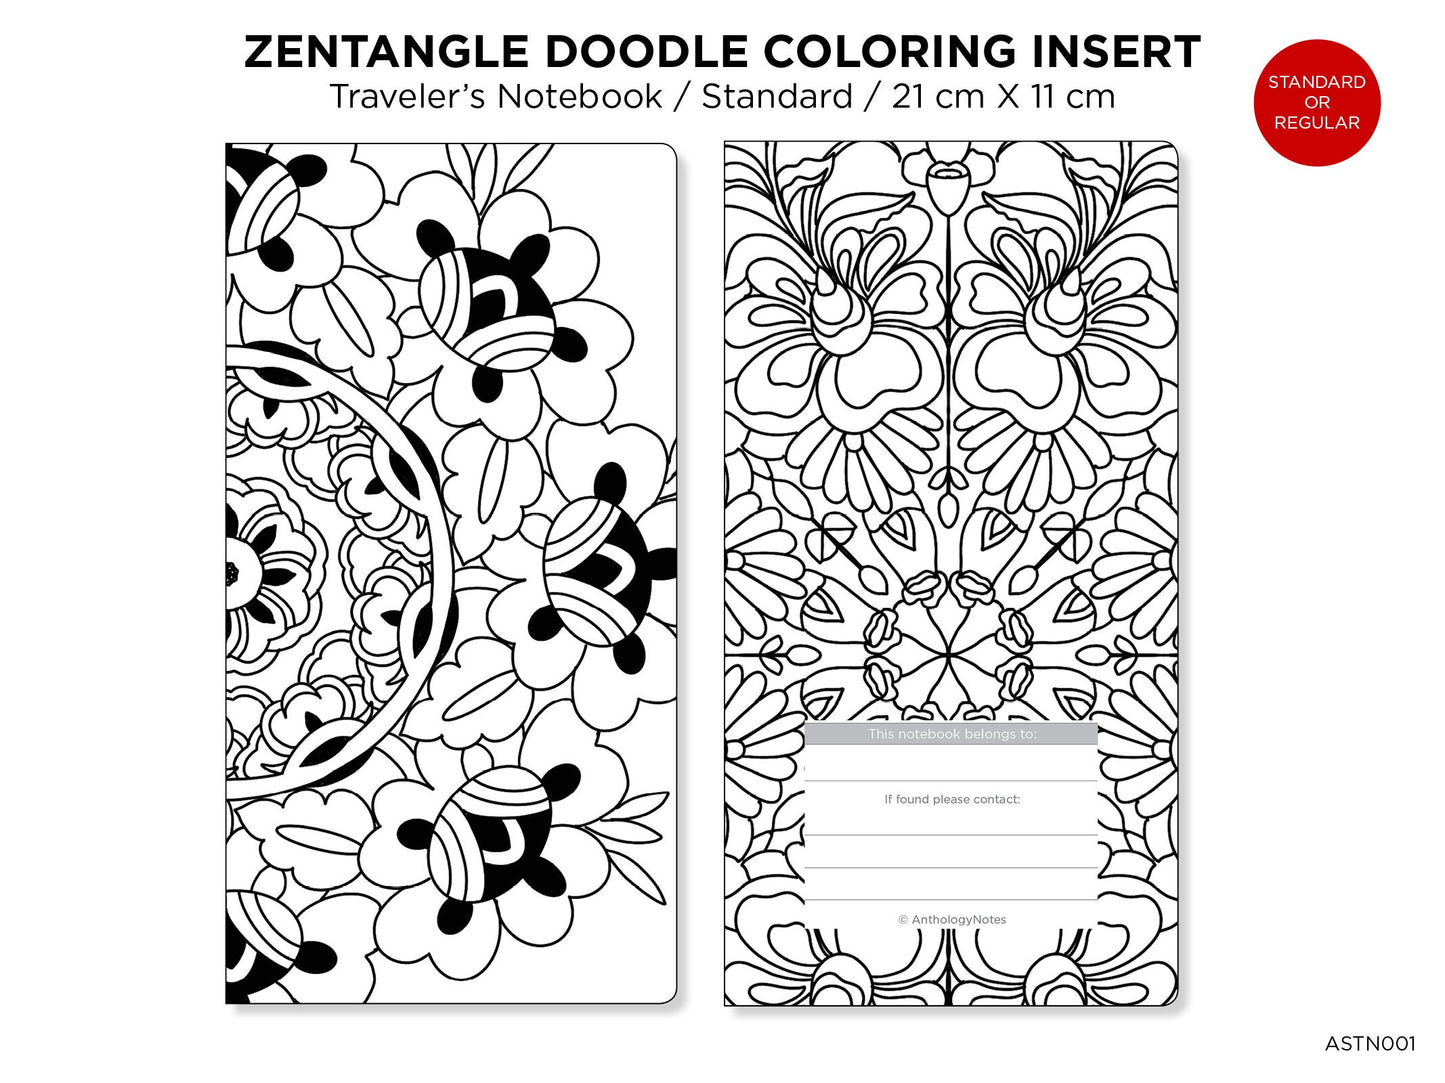 Zen MANDALA Doodles COLORING Activity TN Insert Standard Size Traveler's Notebook